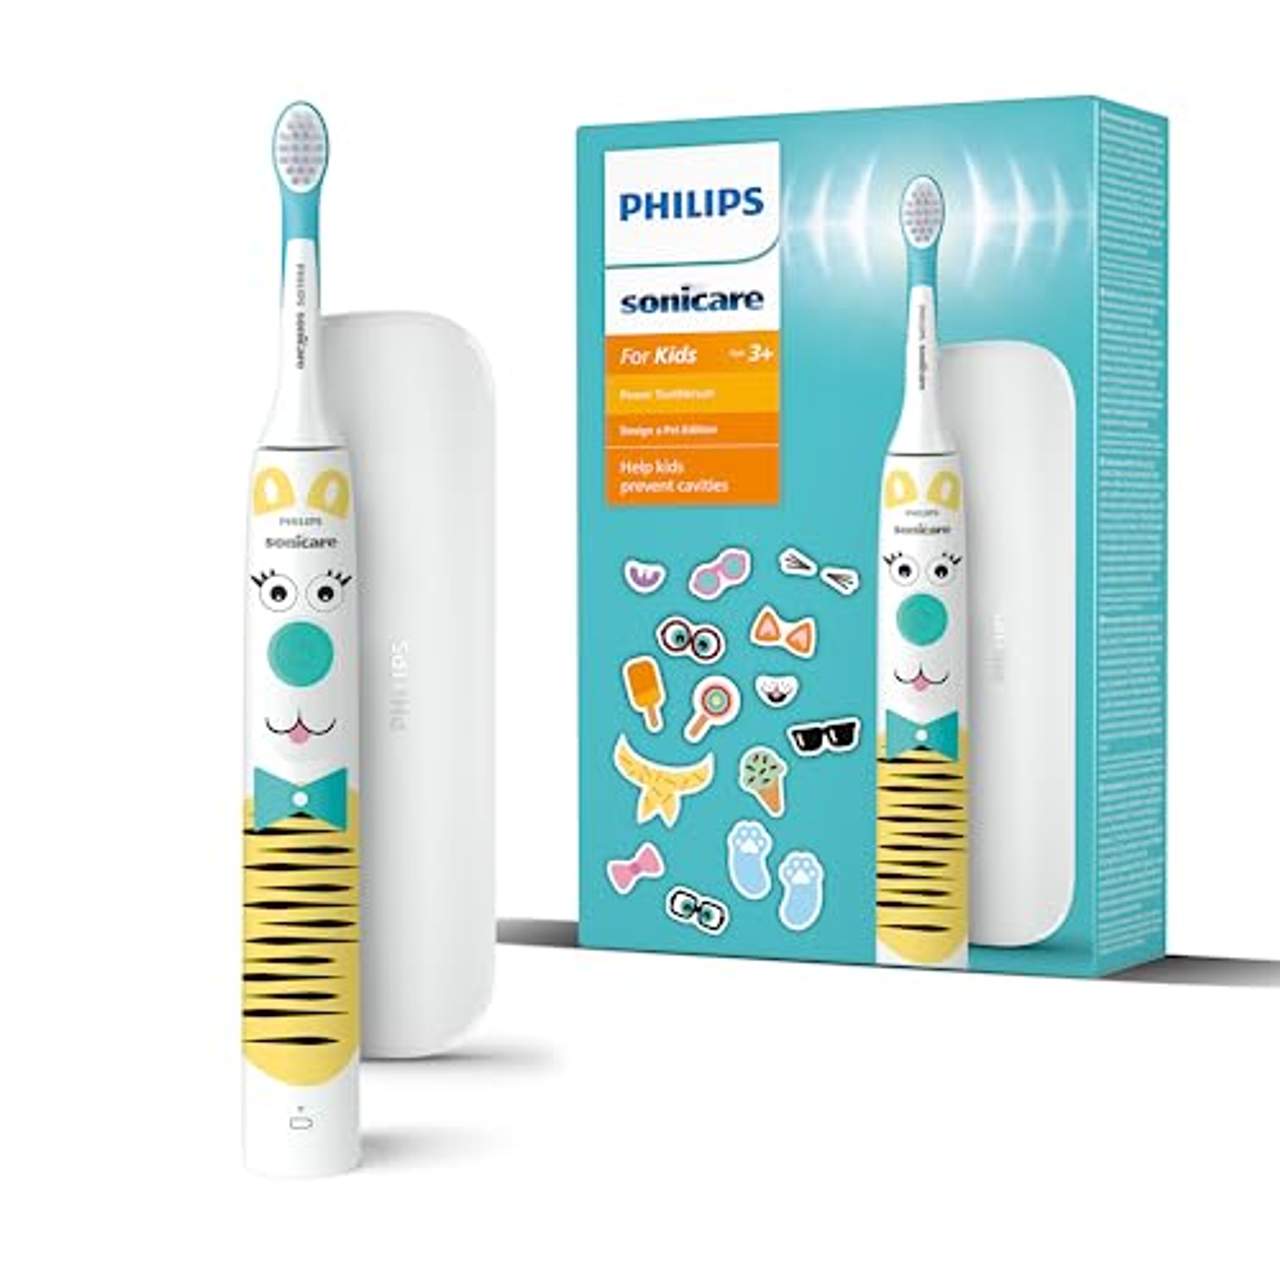 Philips Sonicare For Kids elektrische Zahnbürste